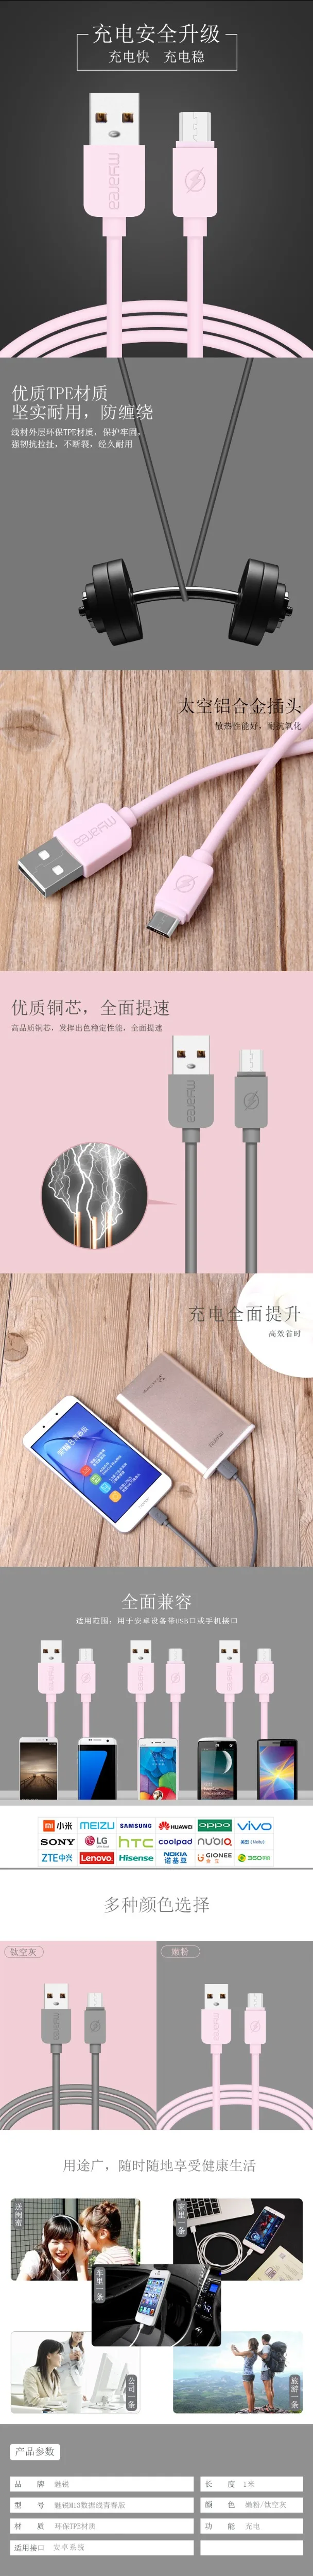 Myregion M13 1 м Micro USB кабель для быстрой зарядки телефона USB зарядное устройство кабель для samsung/xiaomi/LG/huawei Tablet power Bank USB шнур провод